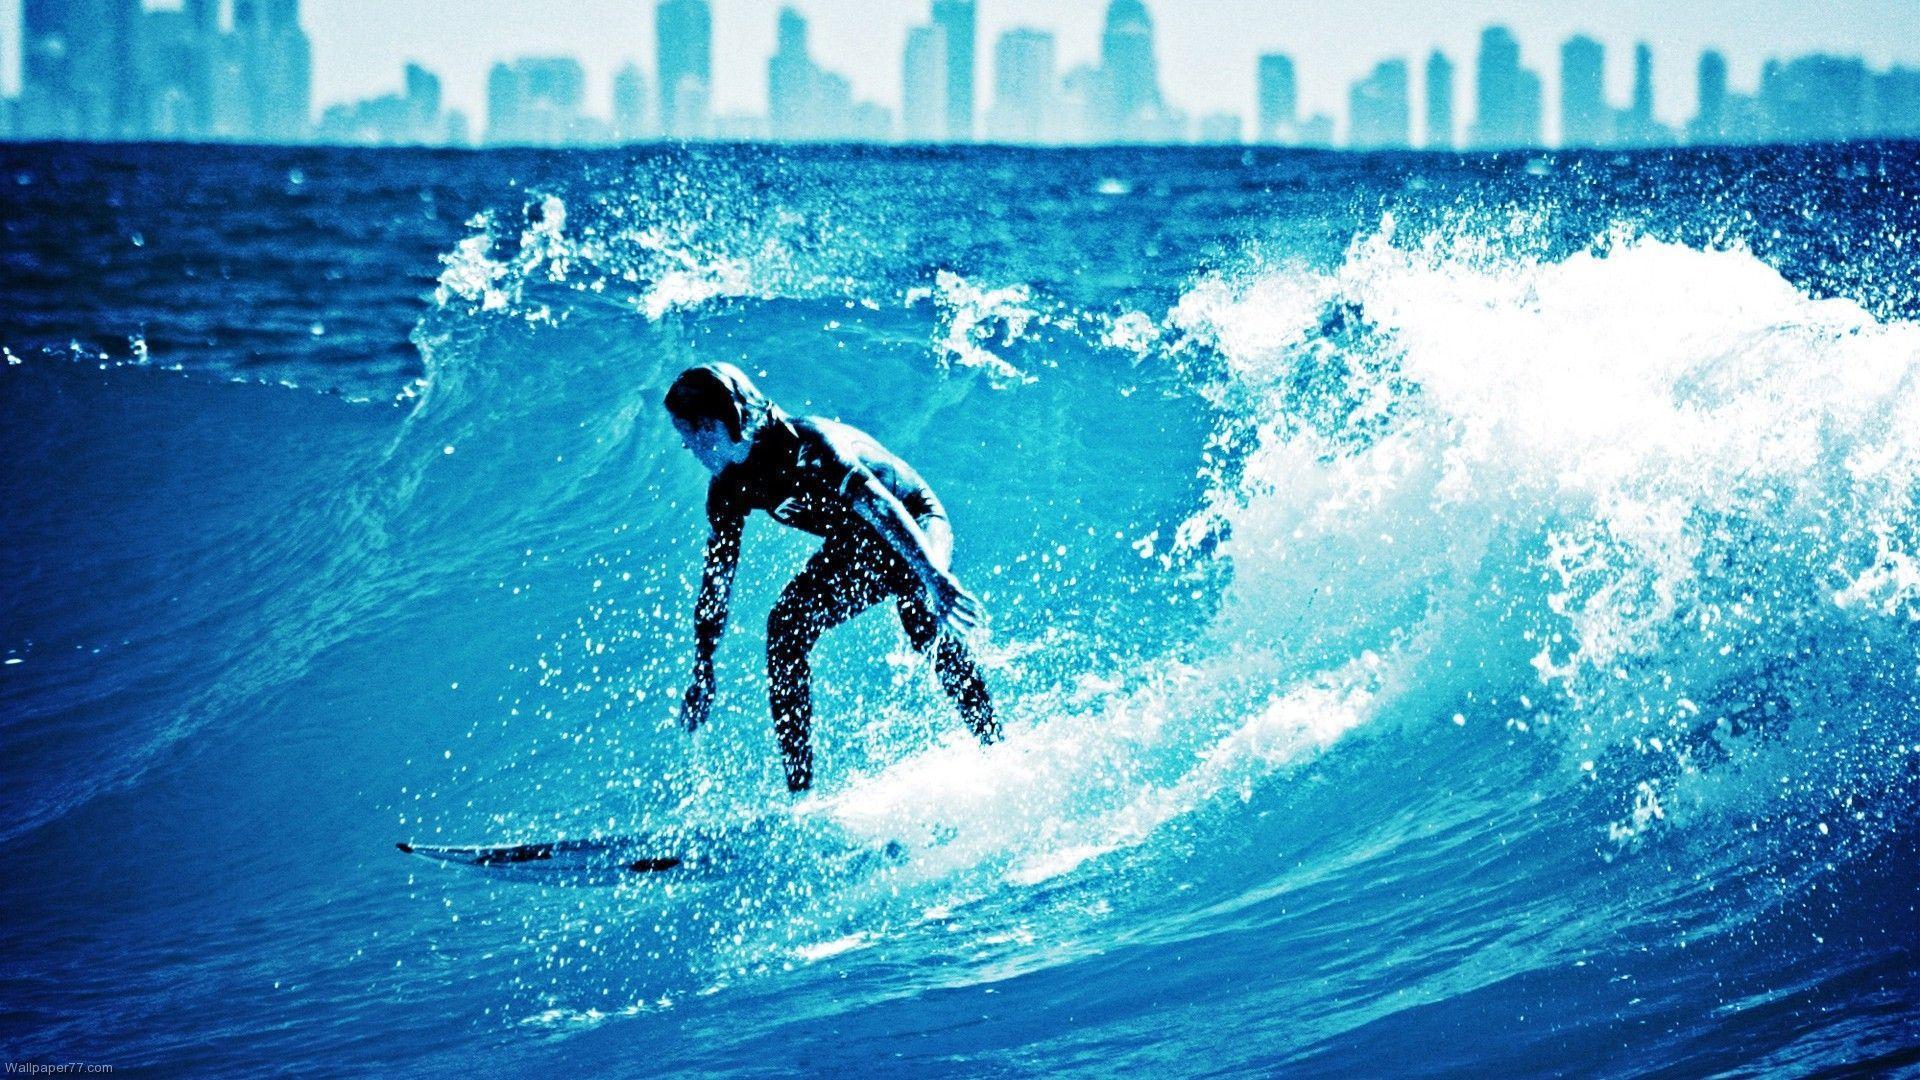 Surfing Desktop Wallpaper, High Definition, High